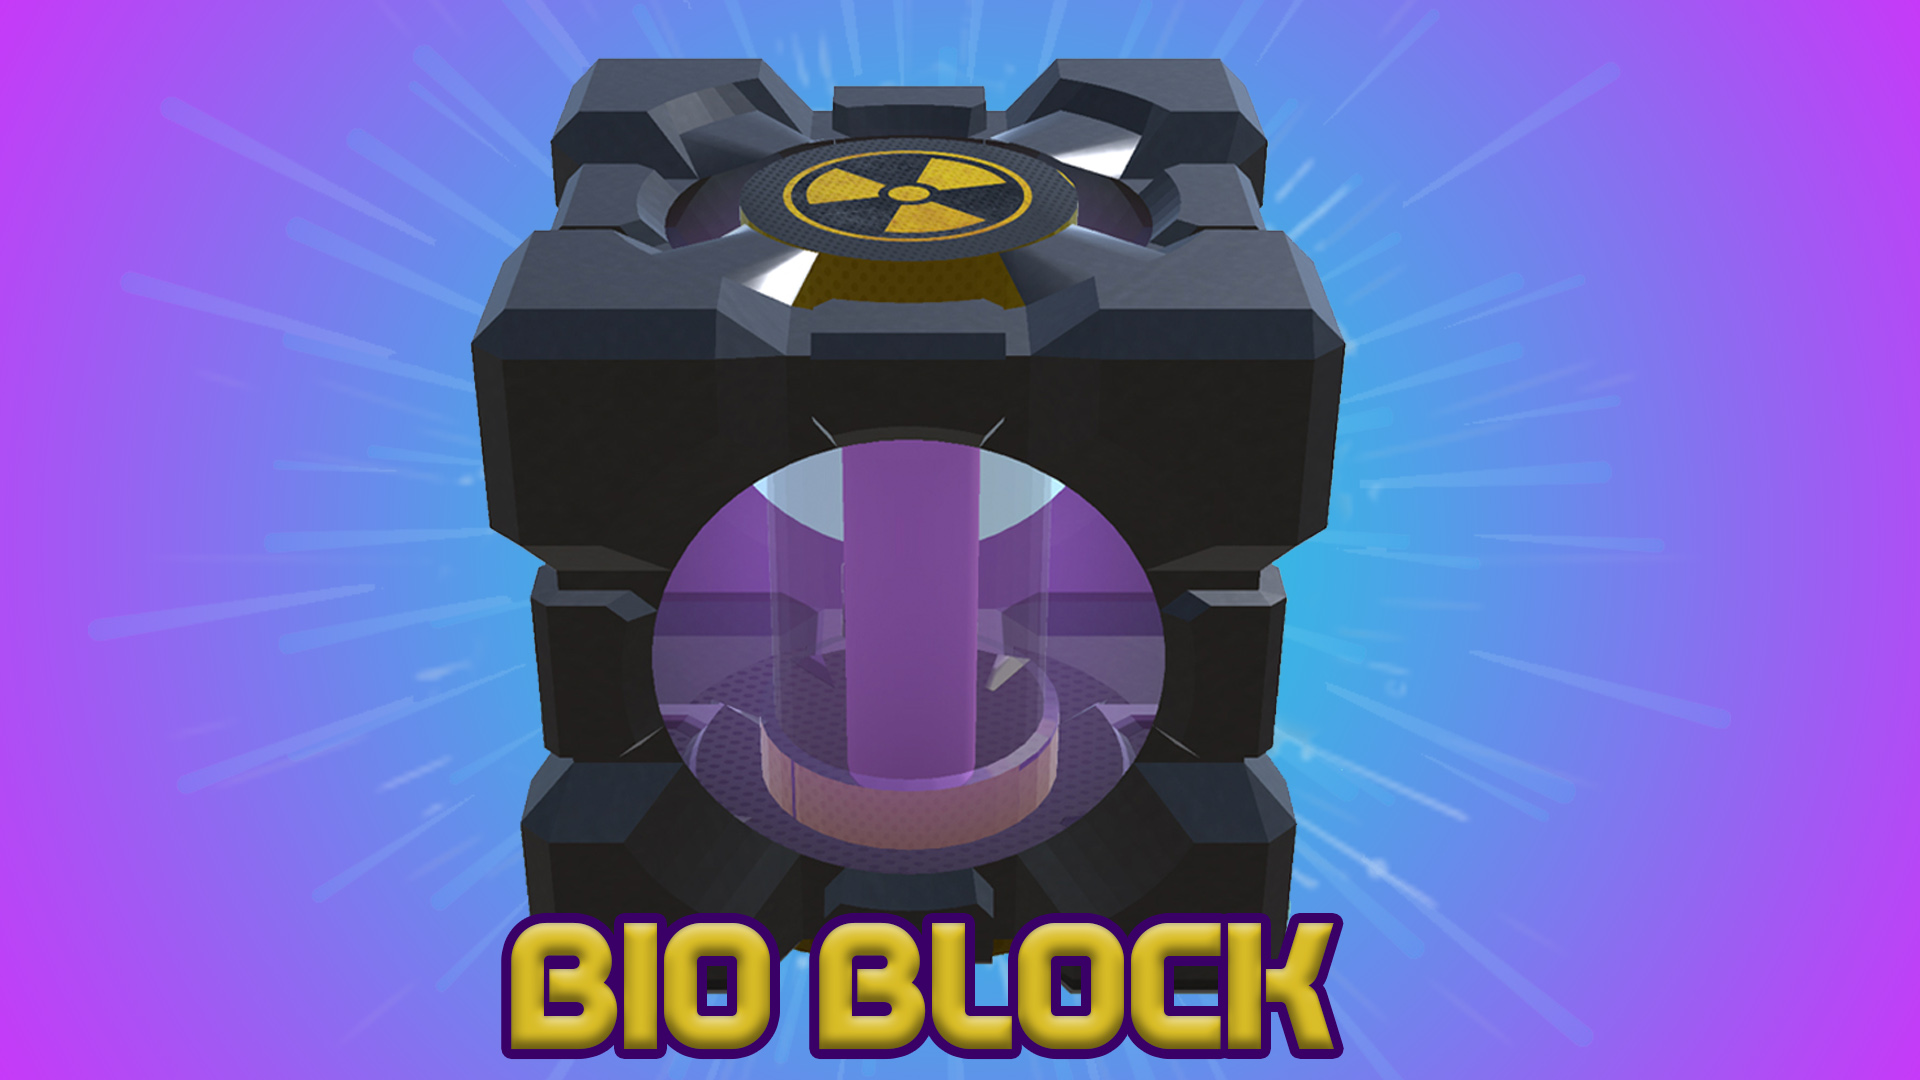 Bio Block